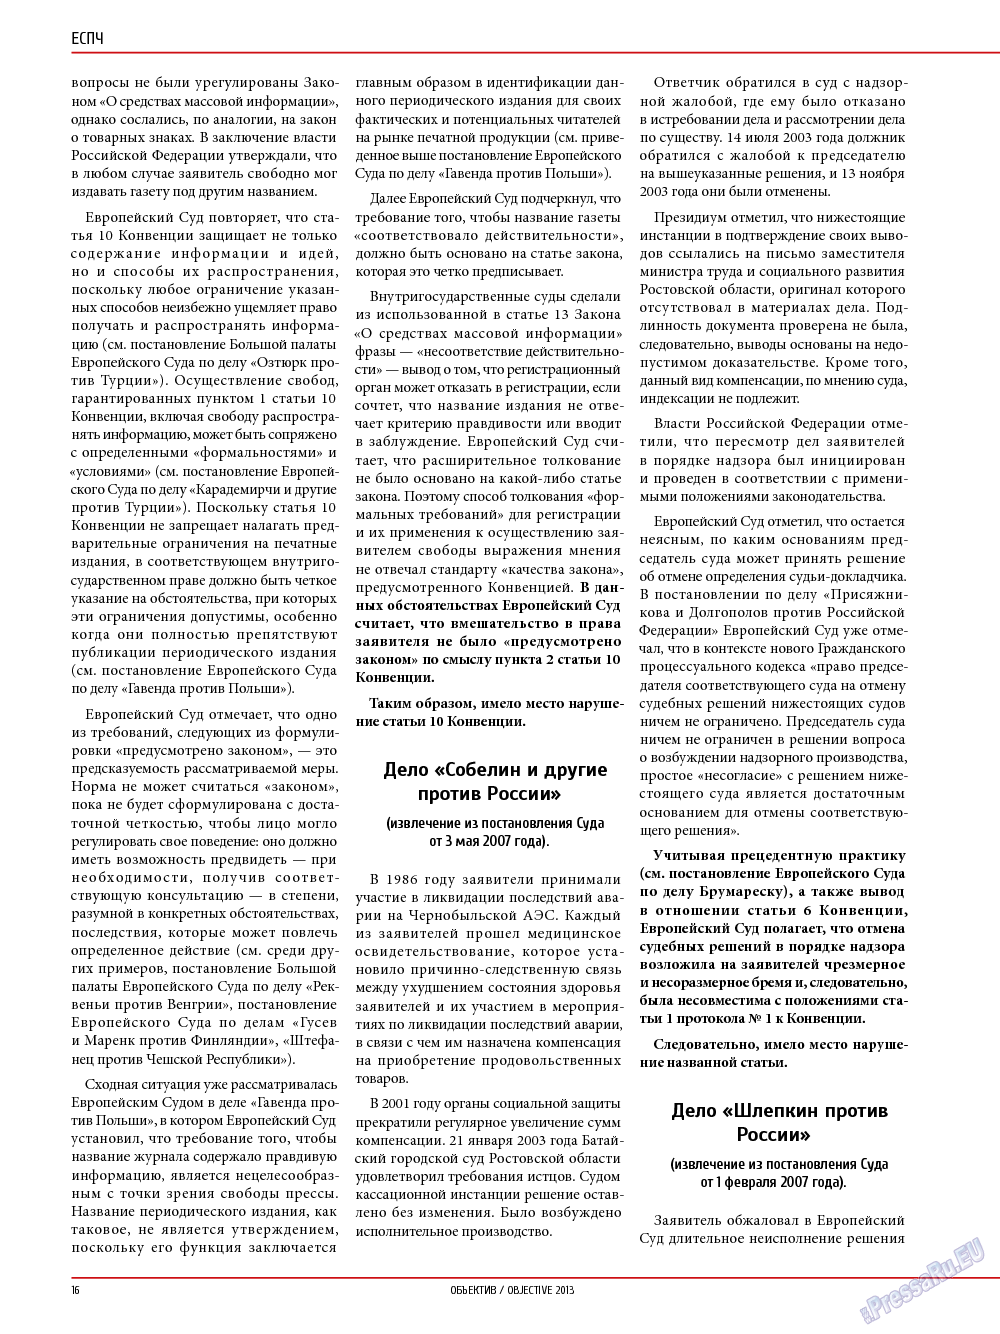 Объектив EU, журнал. 2013 №5 стр.16